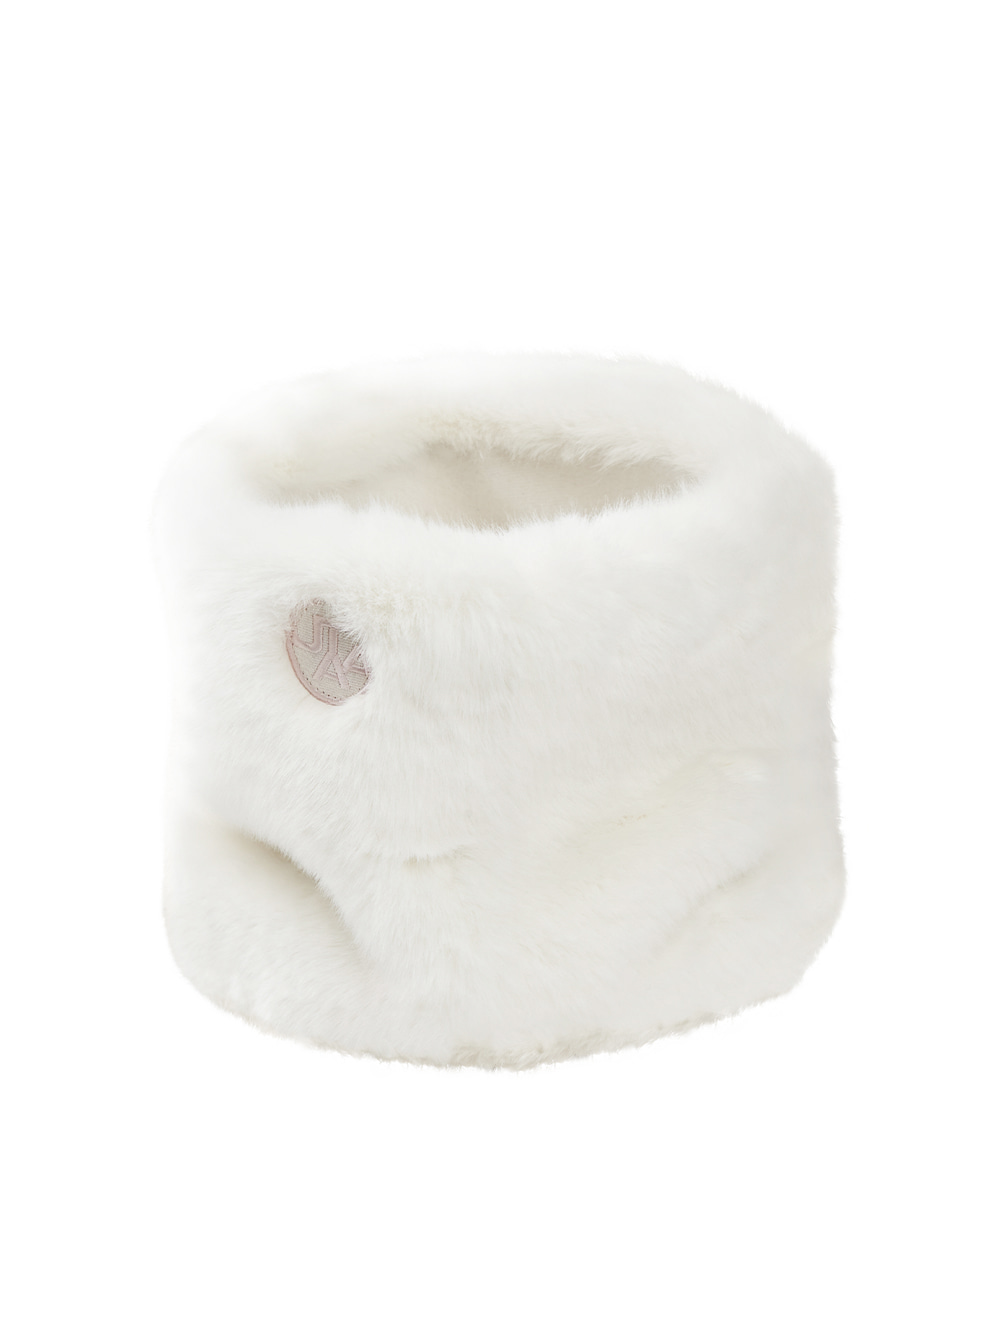 UTAA Snow Fur Neck Warmer : White (UA4GXF632WH)